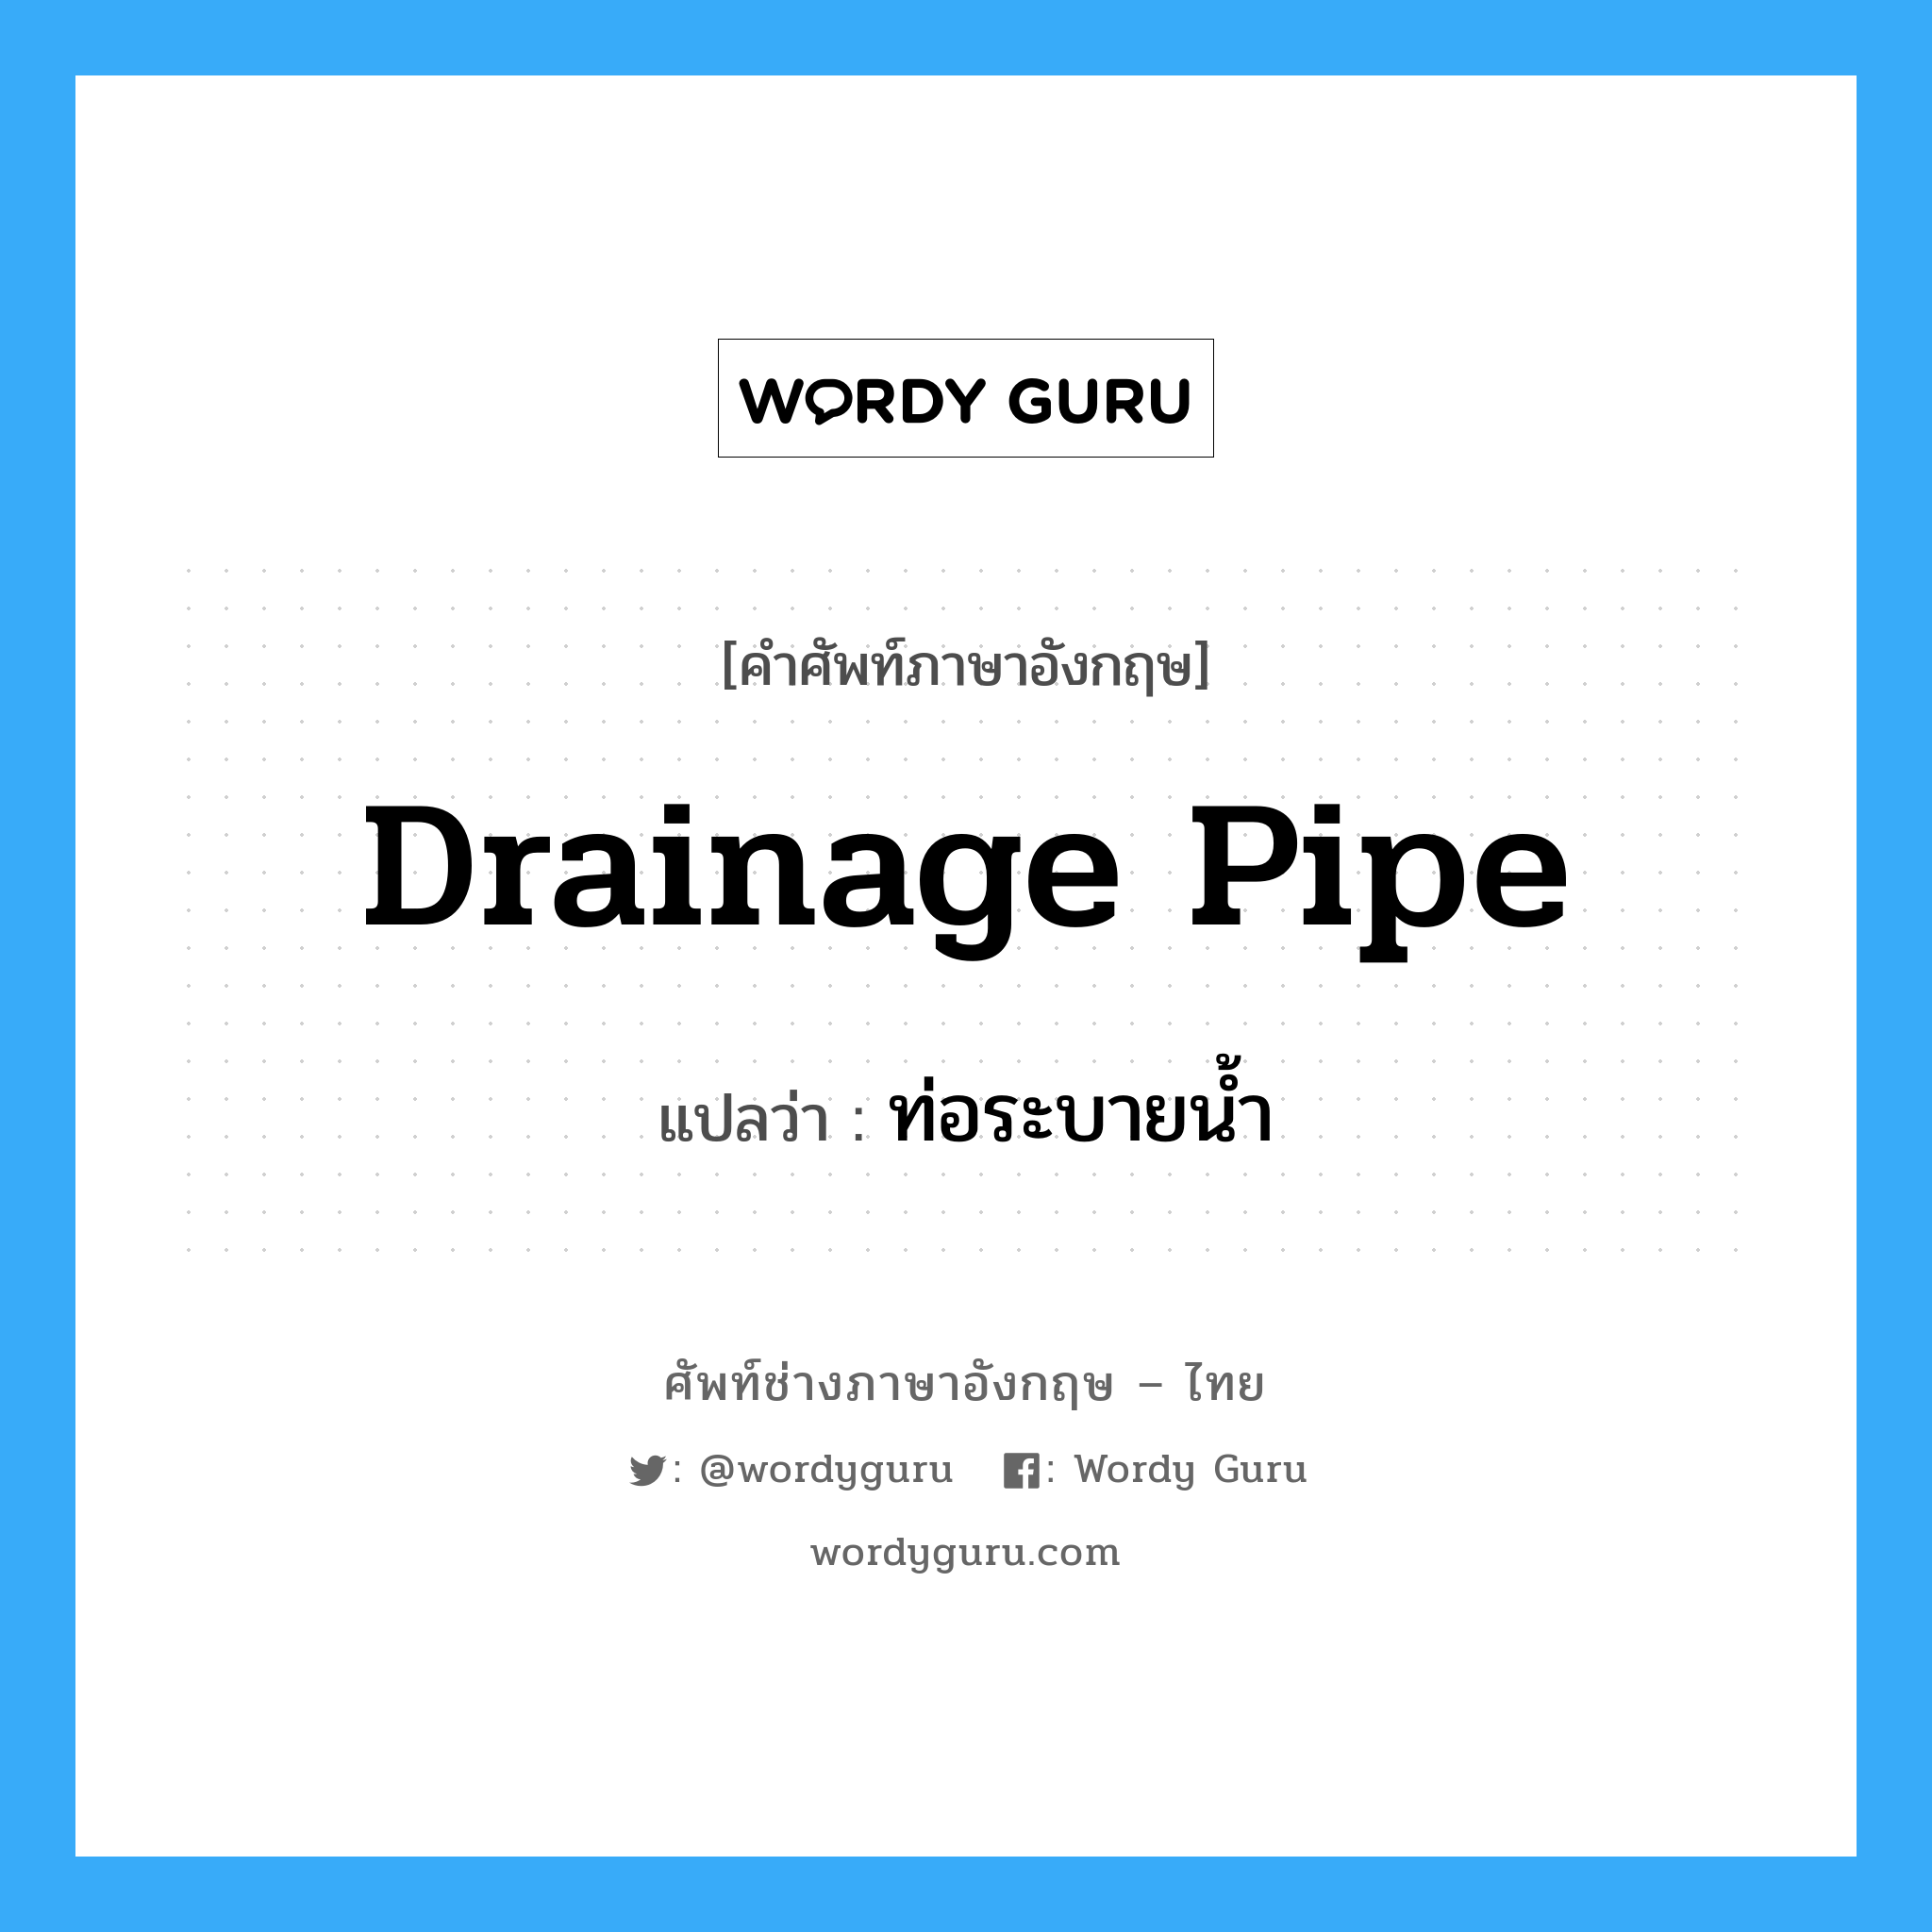 drainage pipe แปลว่า?, คำศัพท์ช่างภาษาอังกฤษ - ไทย drainage pipe คำศัพท์ภาษาอังกฤษ drainage pipe แปลว่า ท่อระบายน้ำ